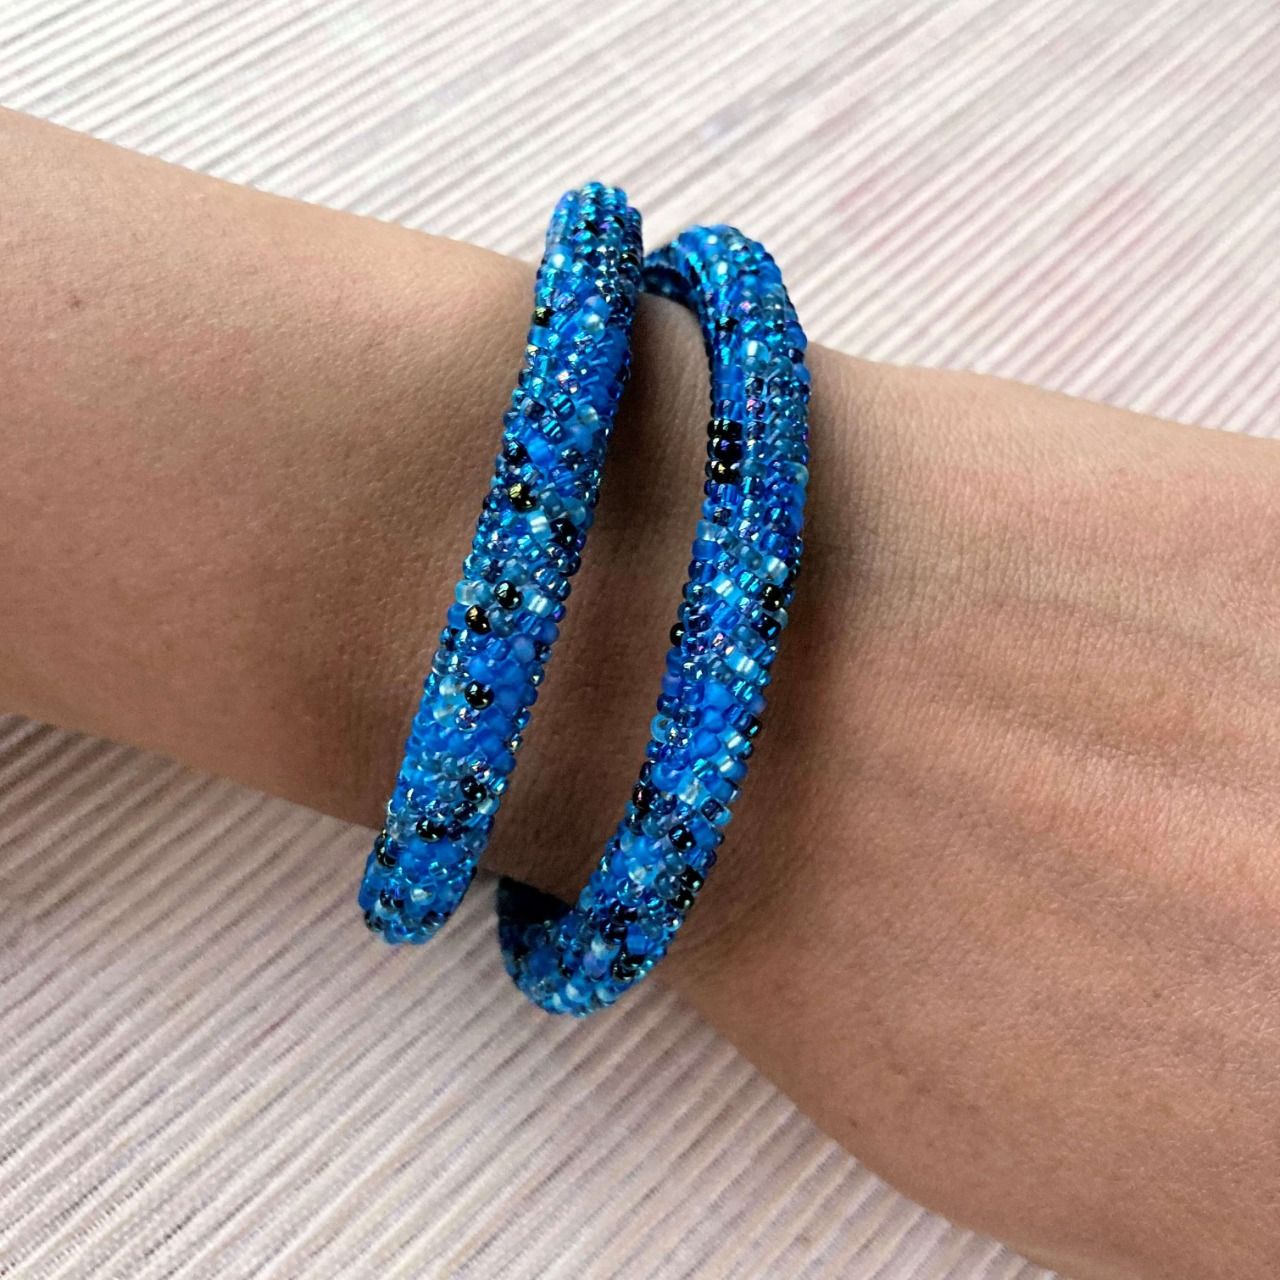 Bracelet De Perles - Camaïeu De Bleus